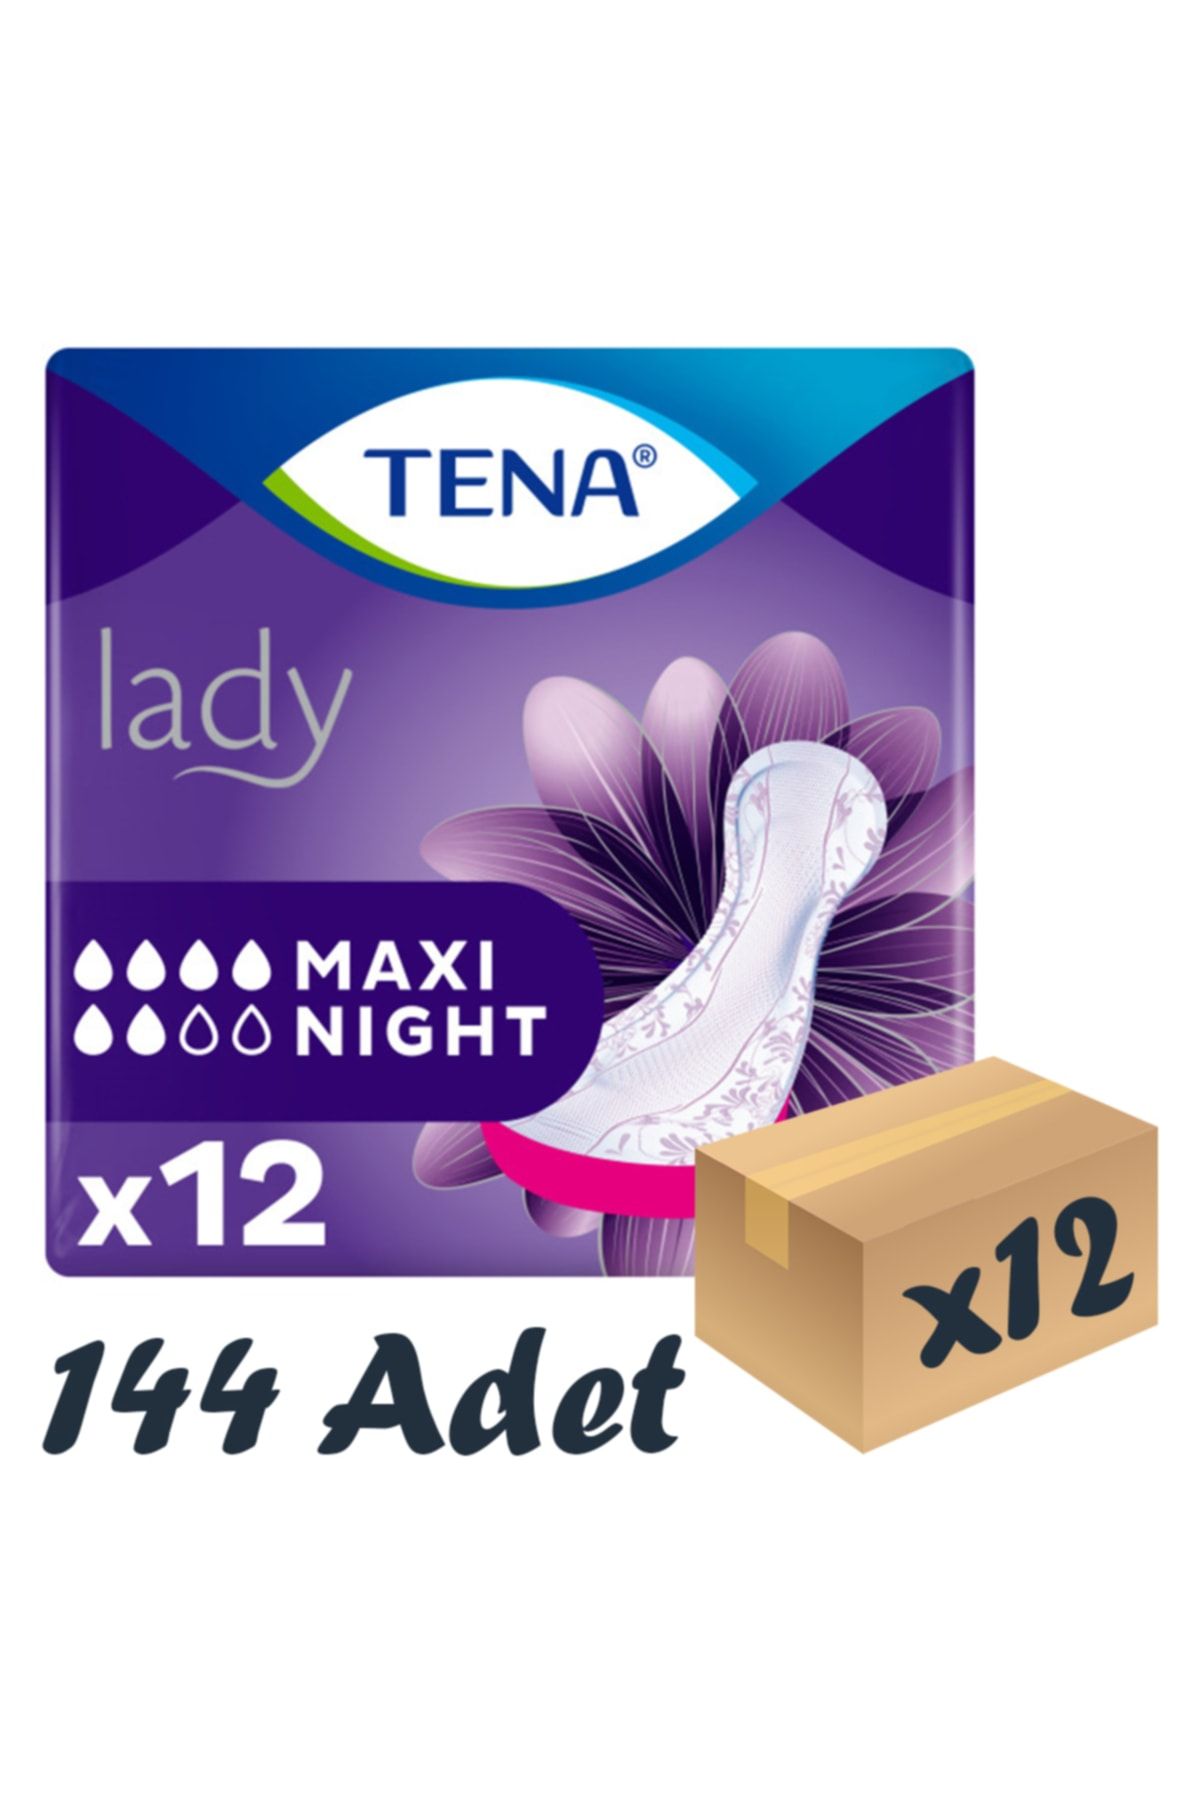 Tena Lady Maxi Night, Kadın Gece Mesane Pedi, 6 Damla, 12'li 12 Paket 144 Adet